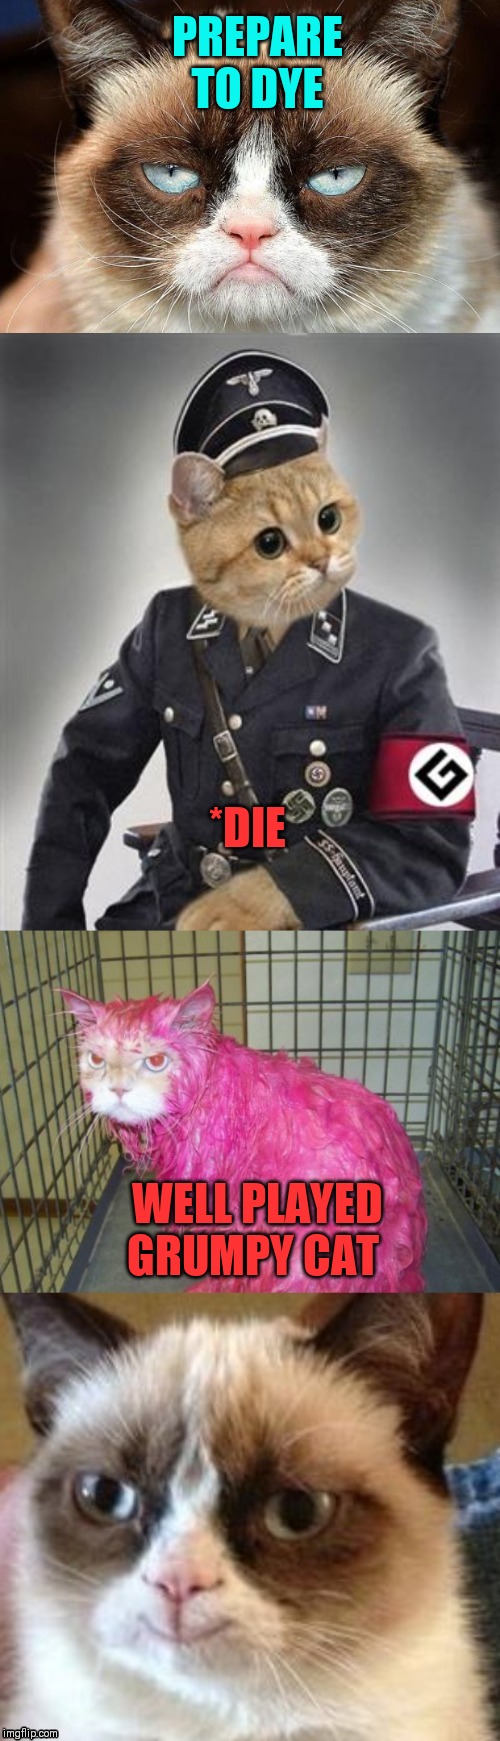 Grumpy Cats Revenge ฅ^•ﻌ•^ฅ | PREPARE TO DYE; *DIE; WELL PLAYED GRUMPY CAT | image tagged in grumpy,grammar nazi,cats,just a silly joke | made w/ Imgflip meme maker